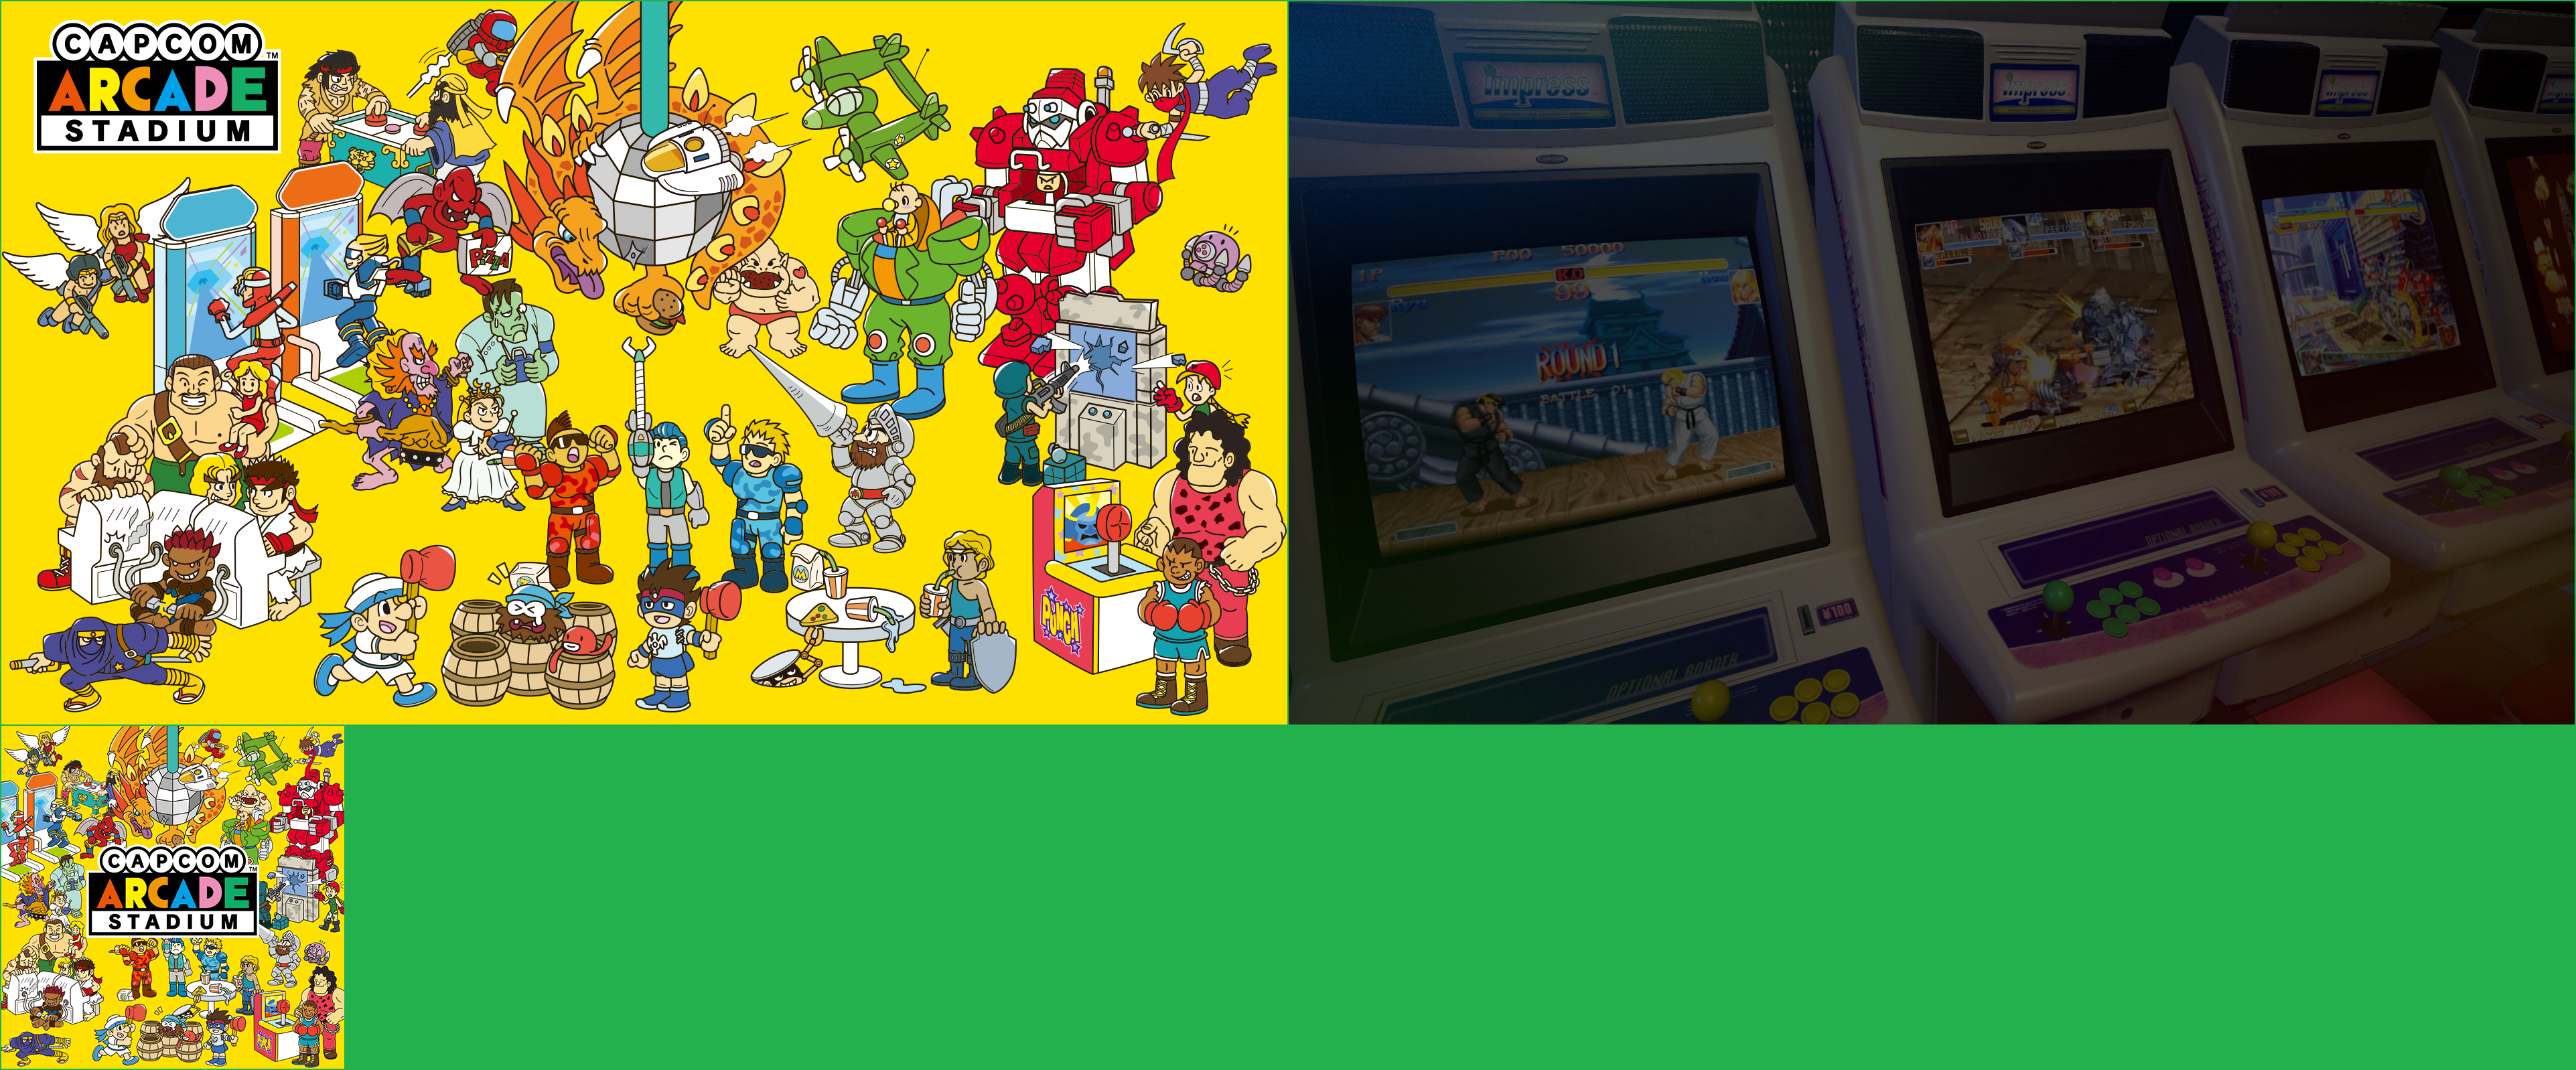 Capcom Arcade Stadium - Game Icon and Banners